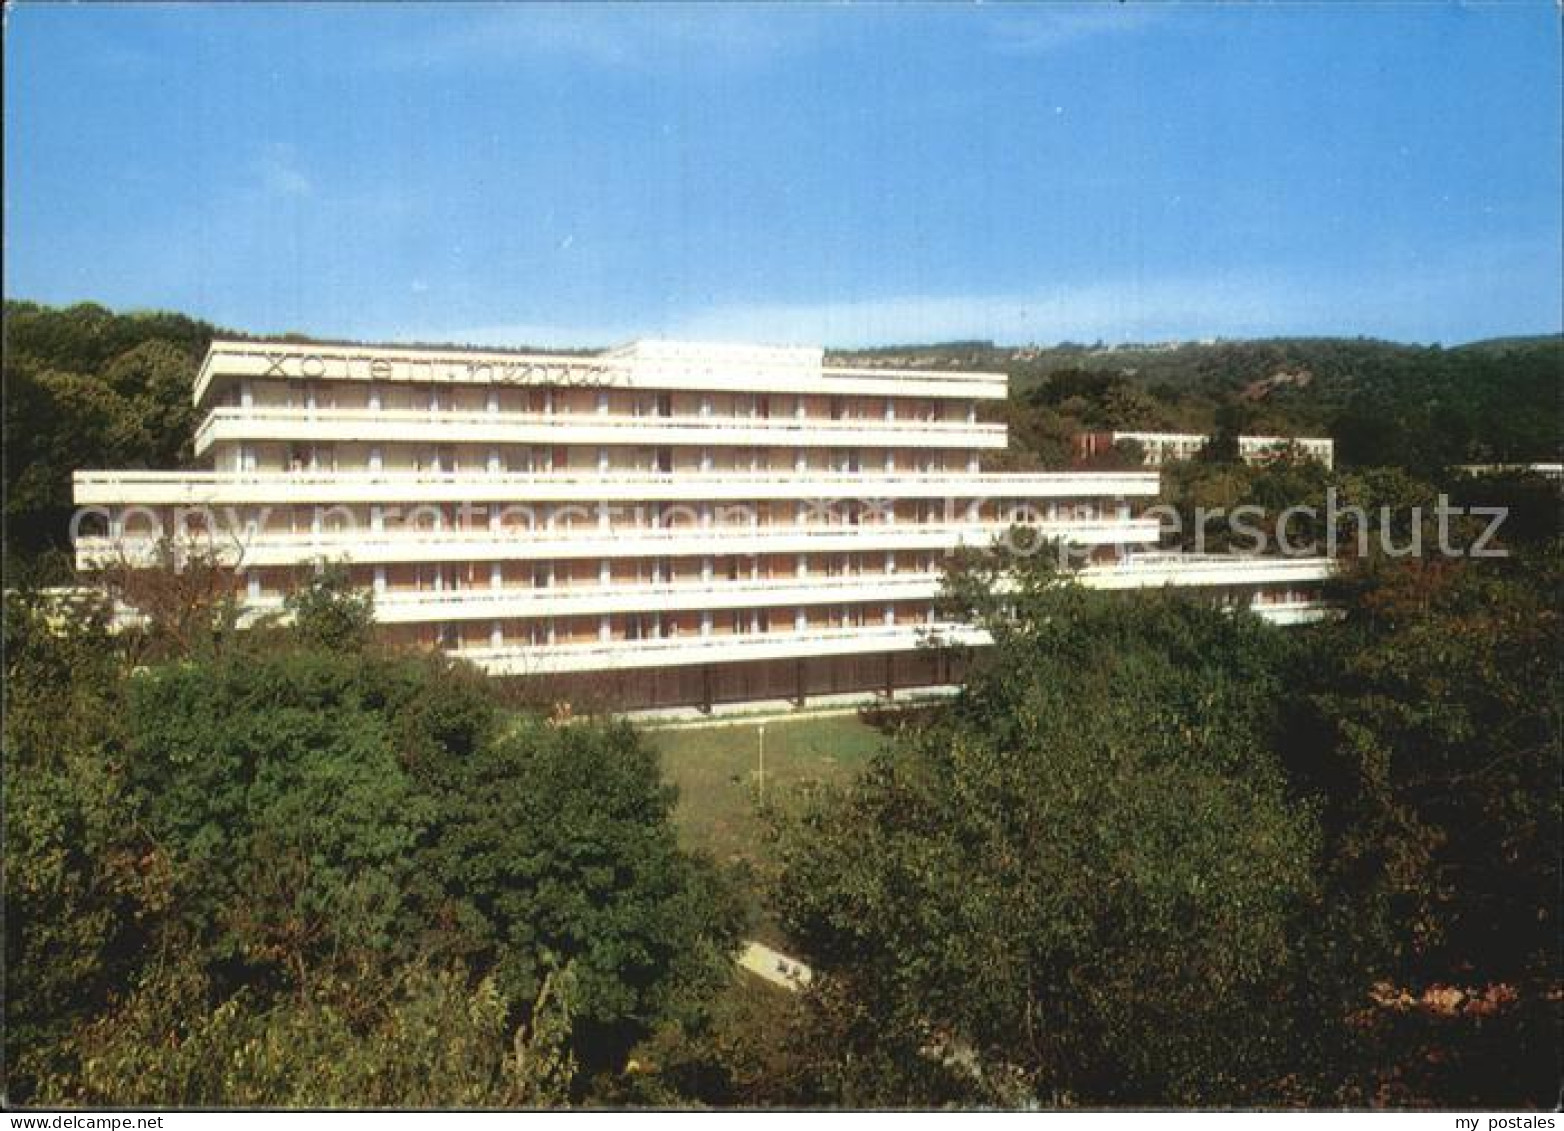 72534031 Slatni Pjassazi Hotel Perla Warna Bulgarien - Bulgaria